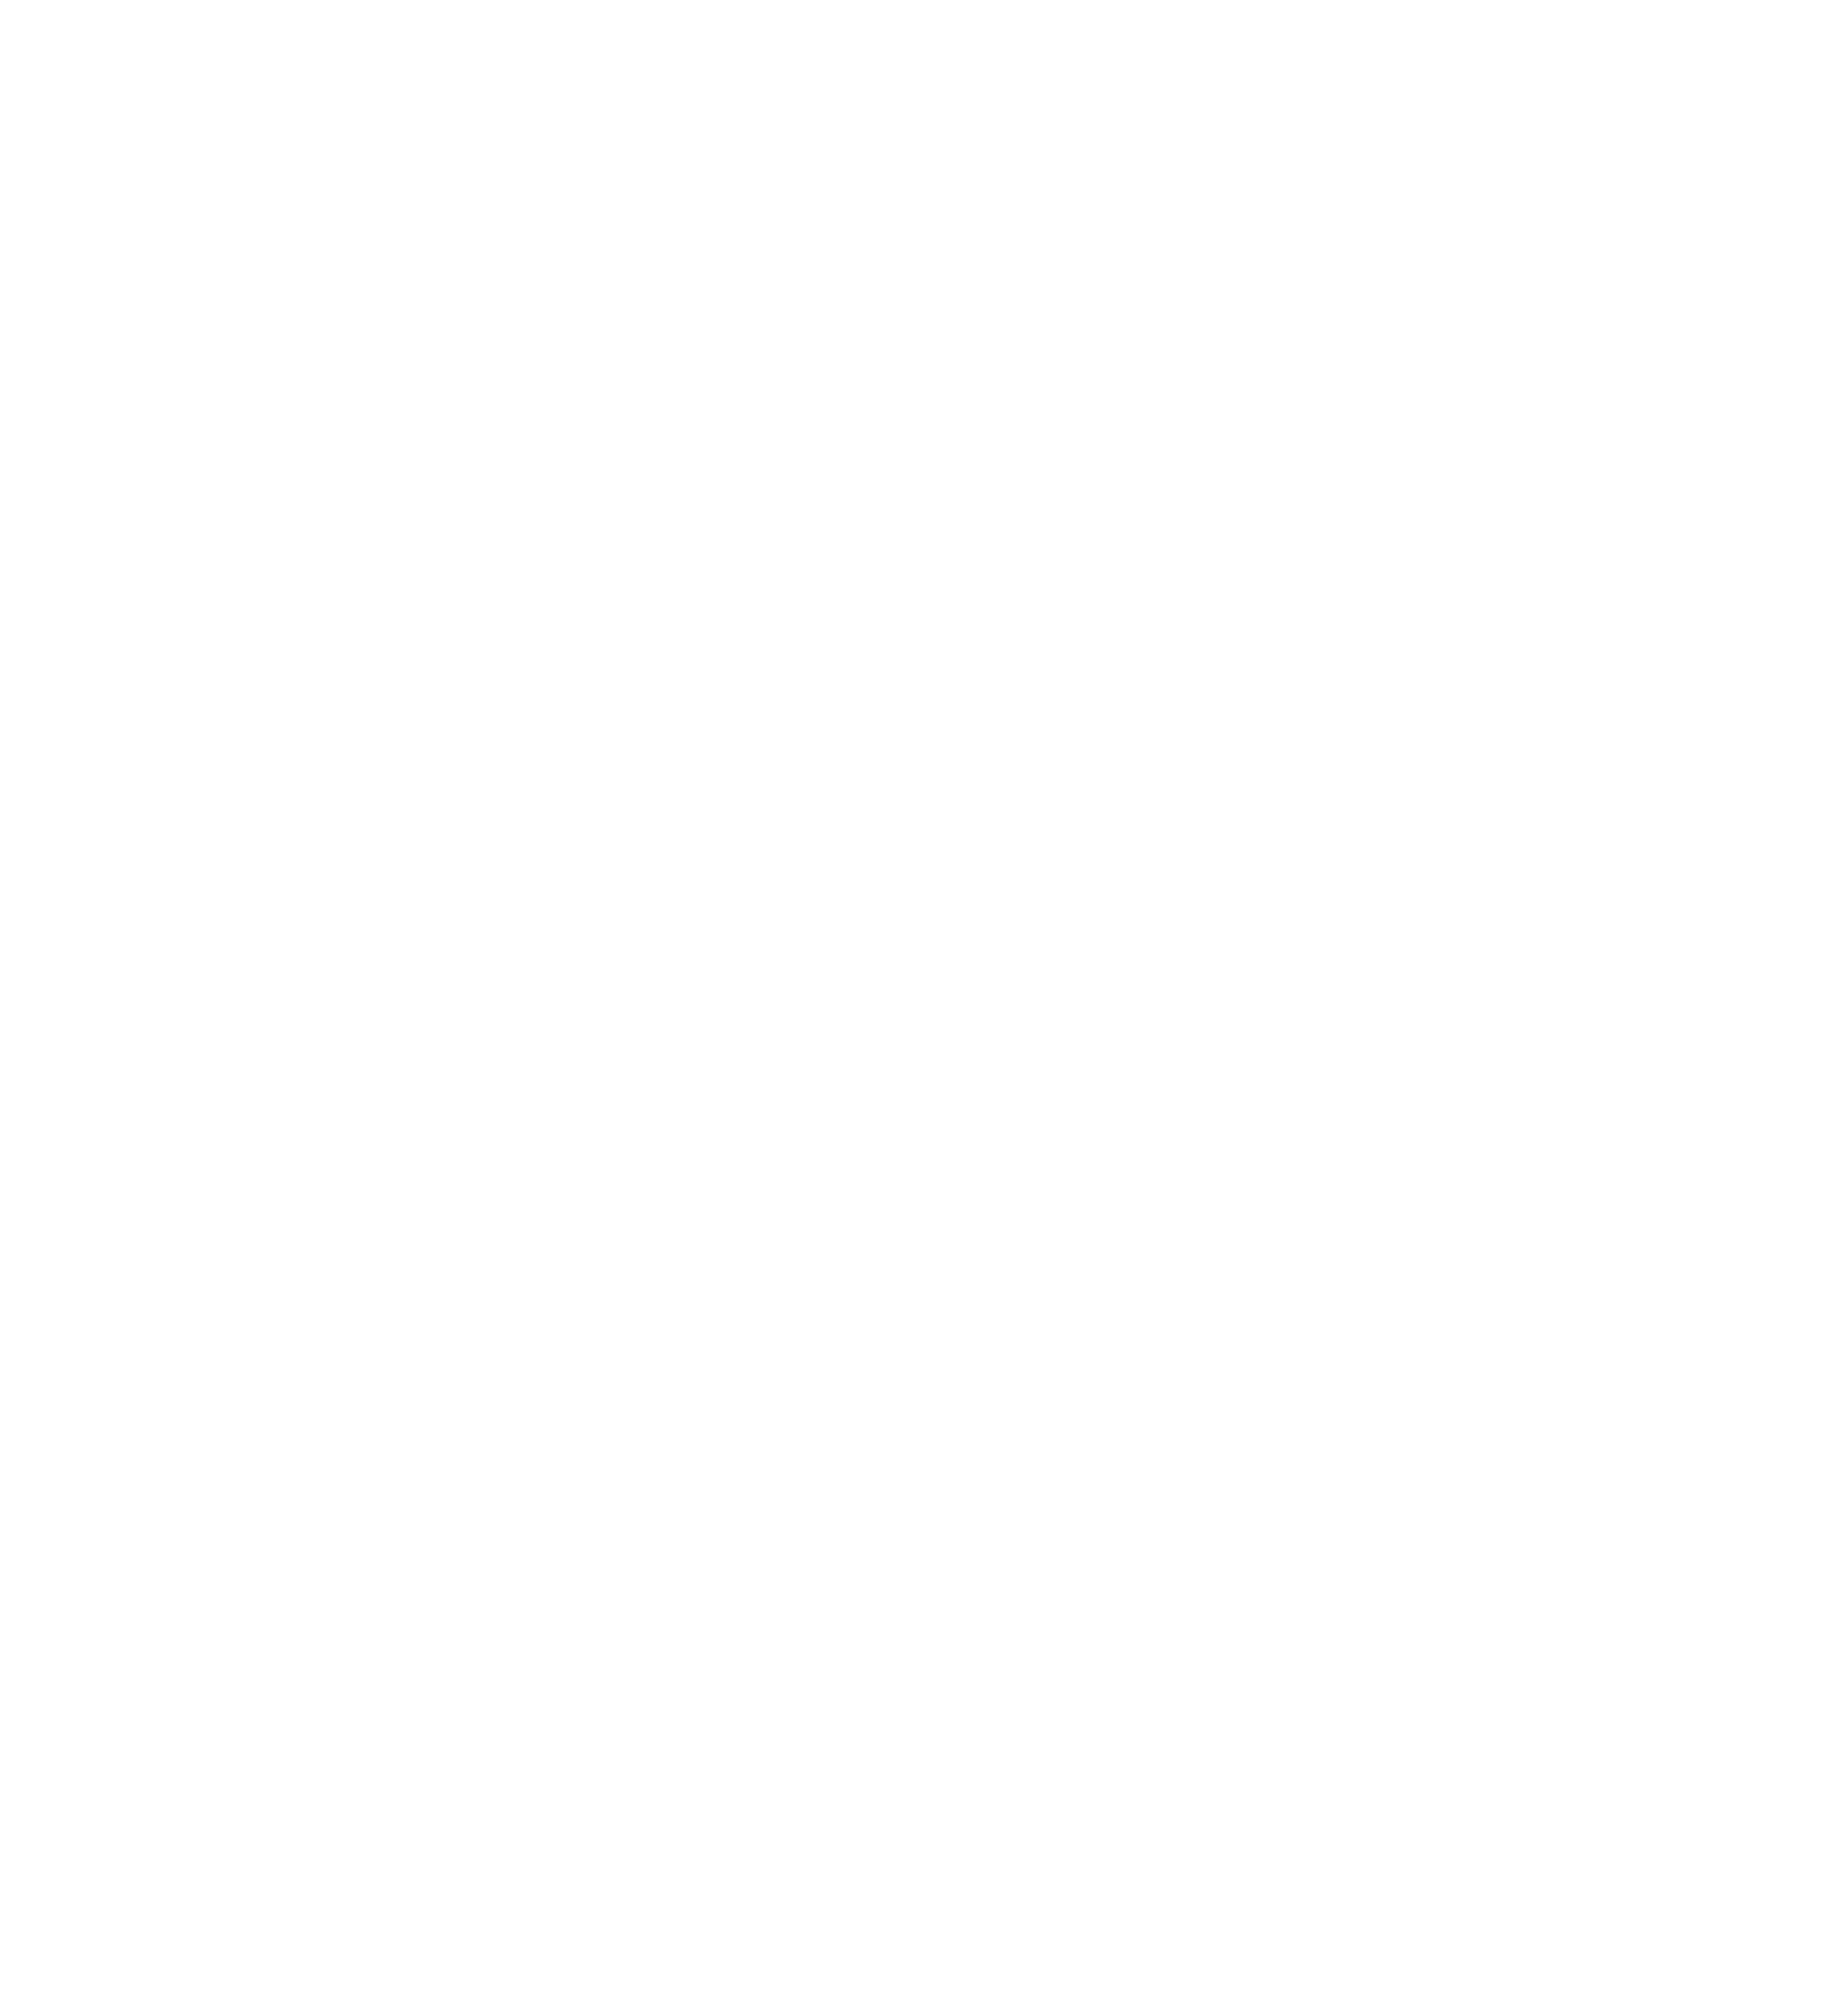 White Microsoft Edge Logo - Microsoft Edge Logo PNG Transparent & SVG Vector - Freebie Supply